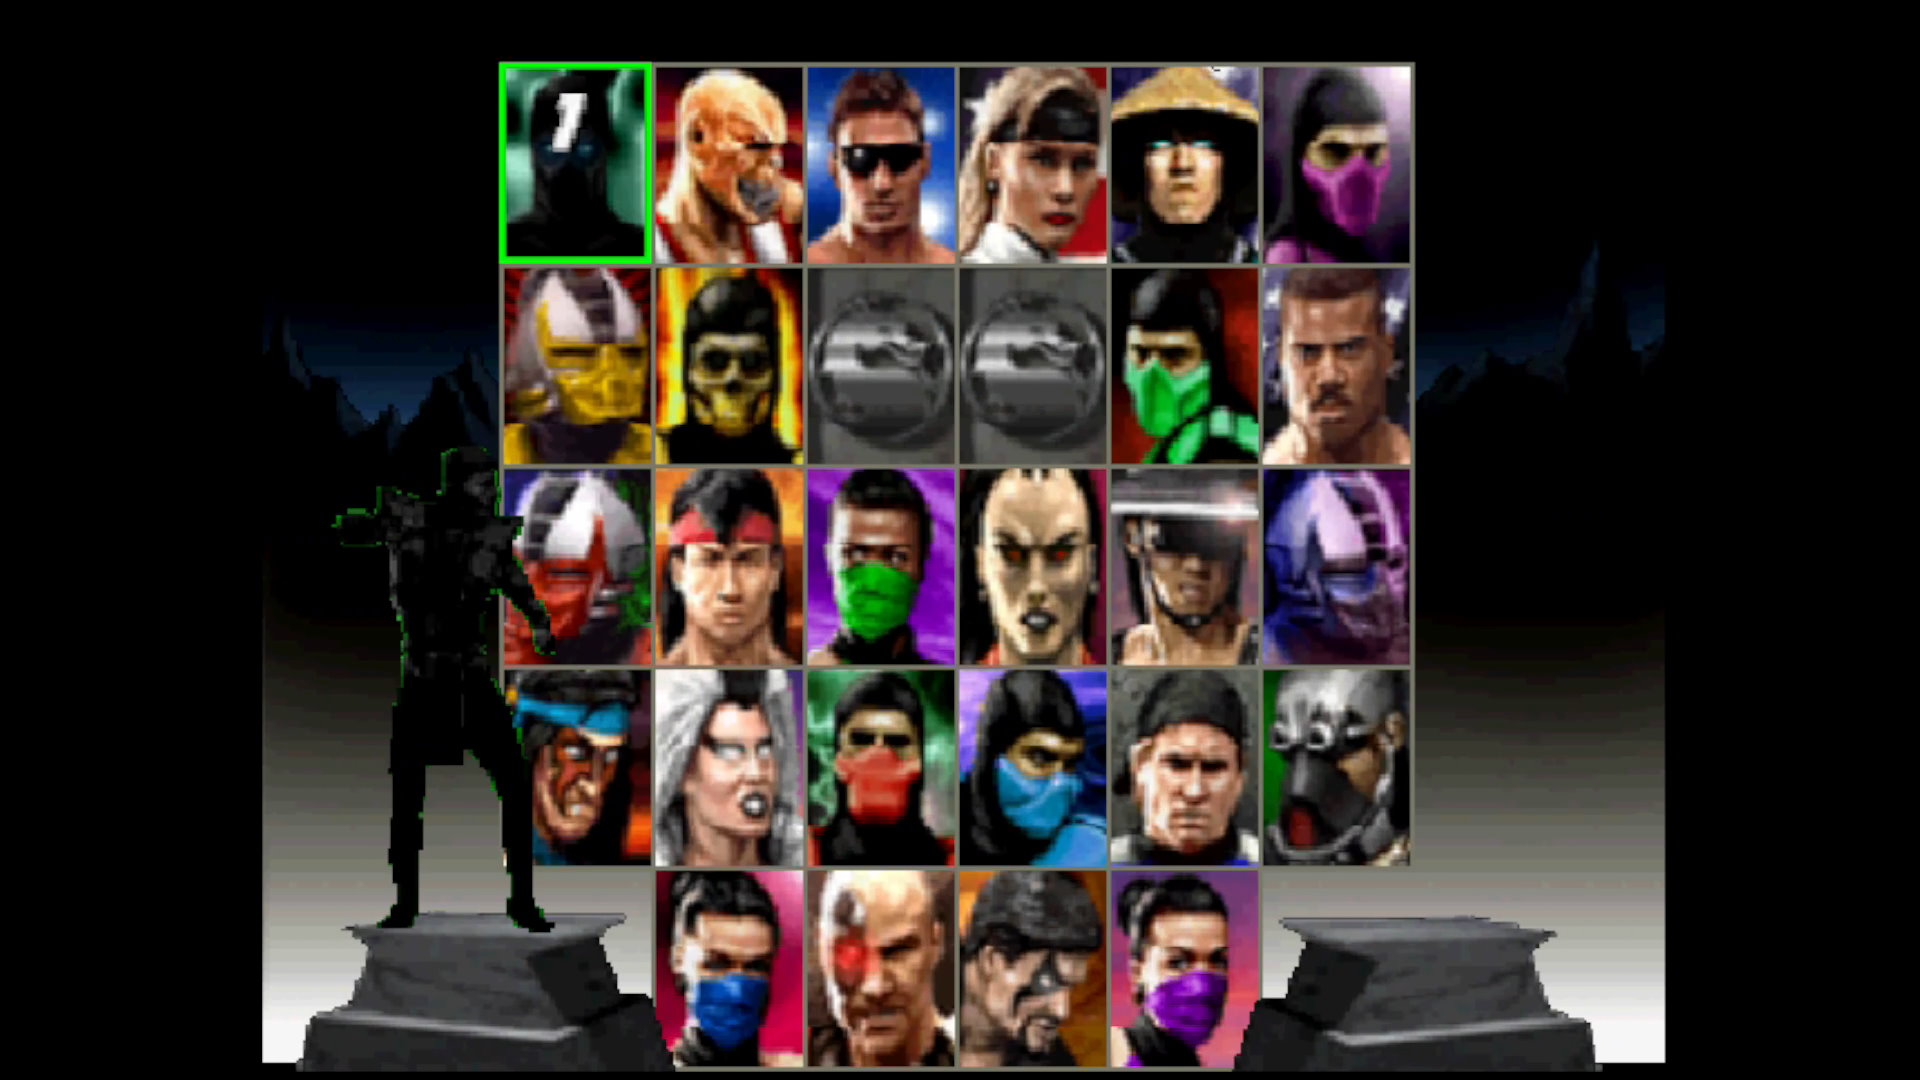 Baraka (2) ∣ Mortal Kombat 9 › Characters 